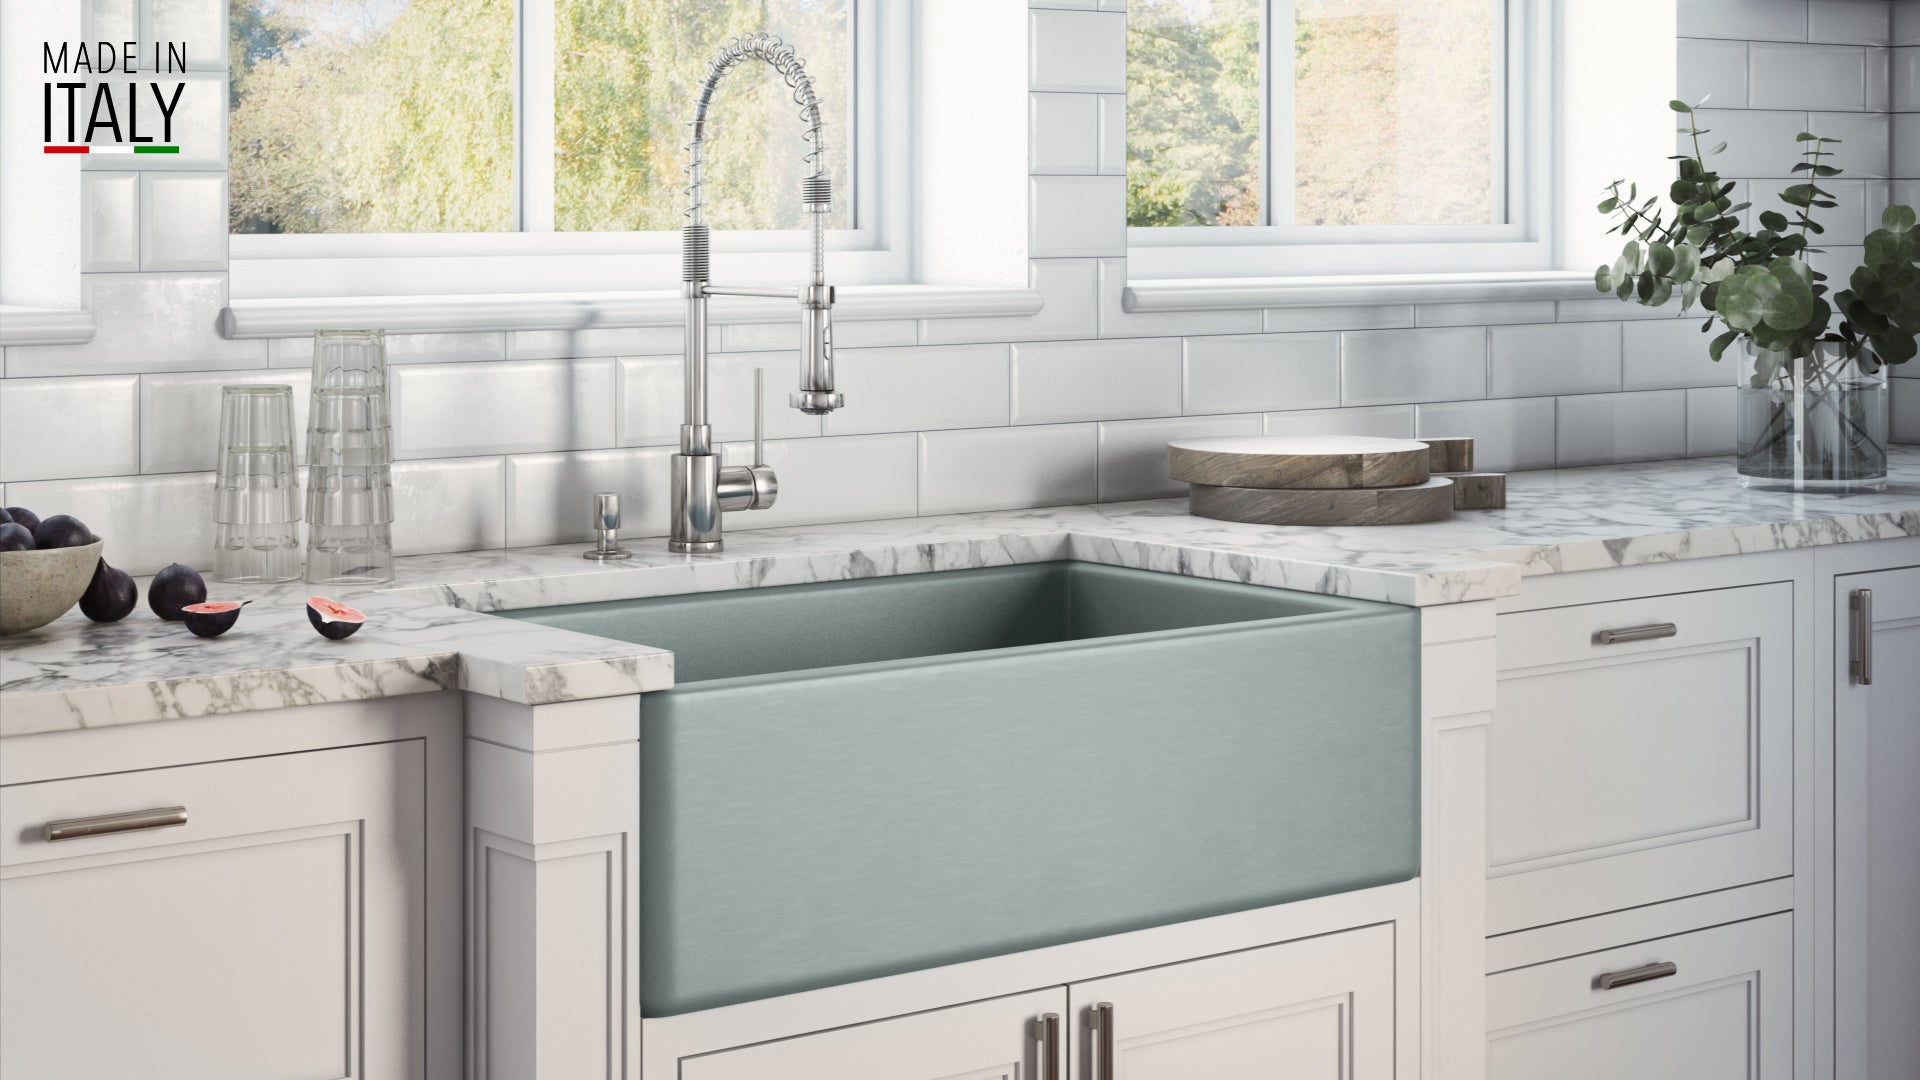 30 x 20 inch Fireclay Reversible Farmhouse Apron-Front Kitchen Sink Single Bowl – Horizon Gray